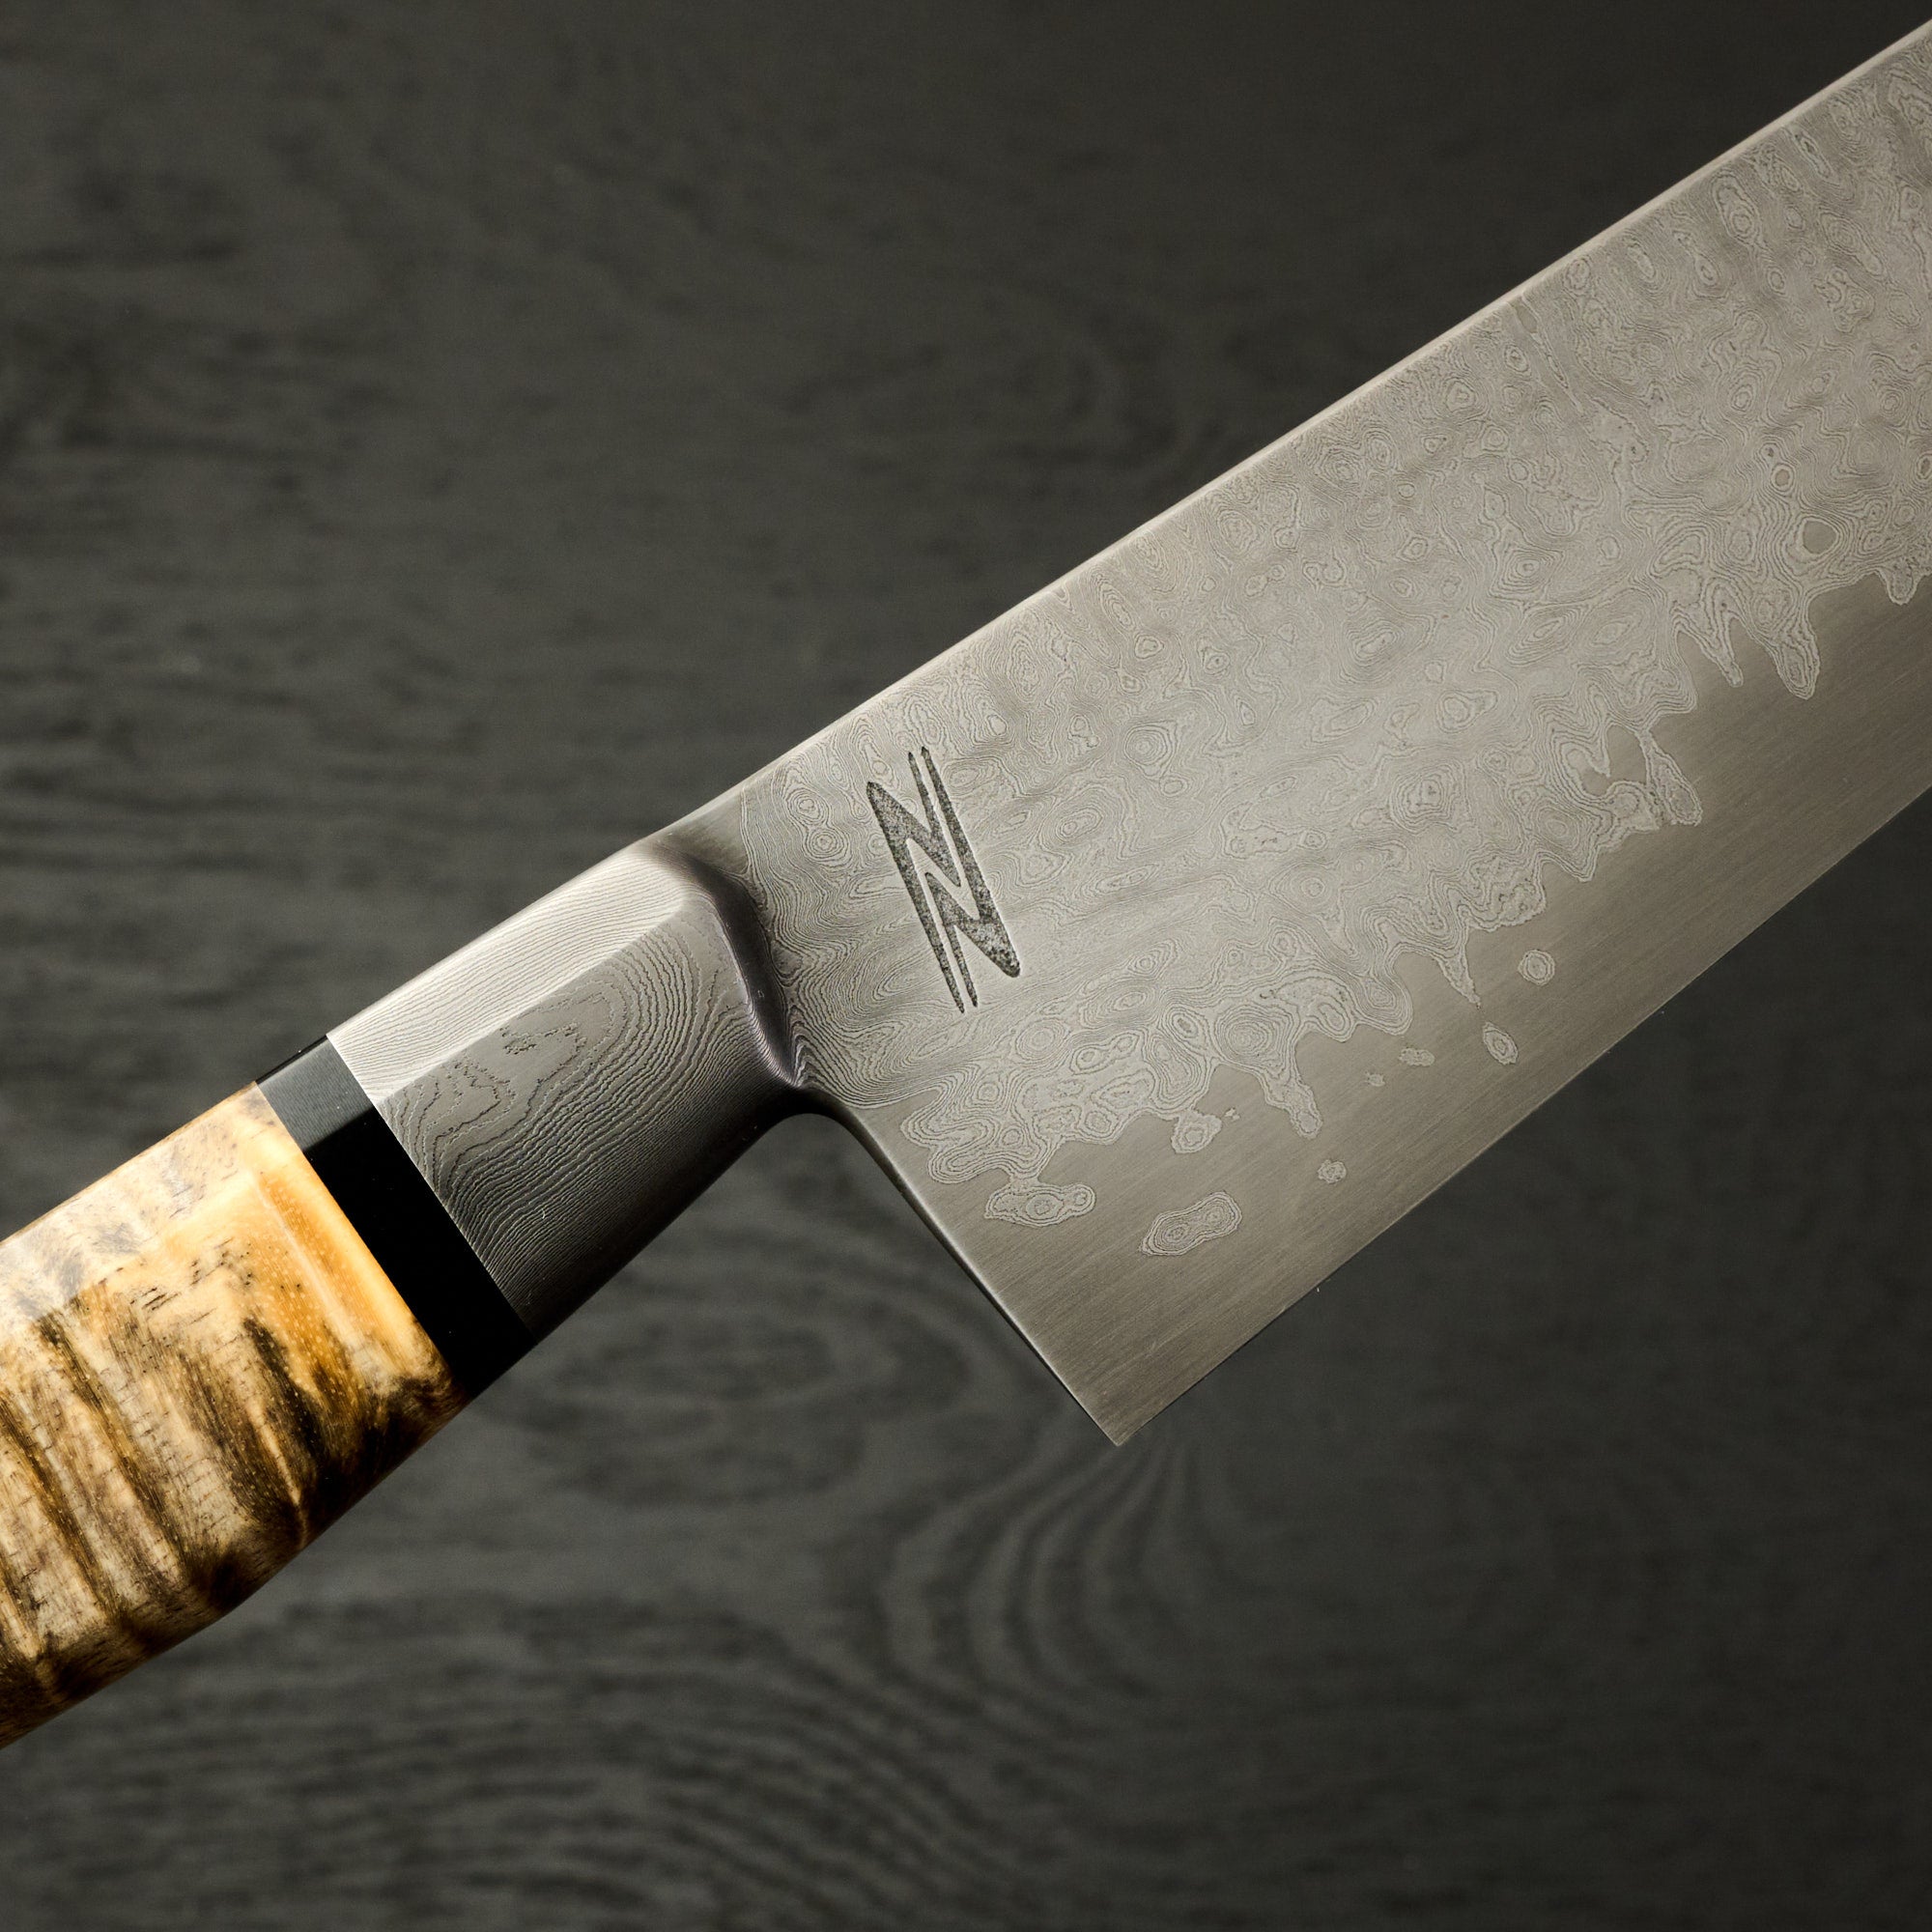 Knife Making - Integral Damascus Japanese style knife 